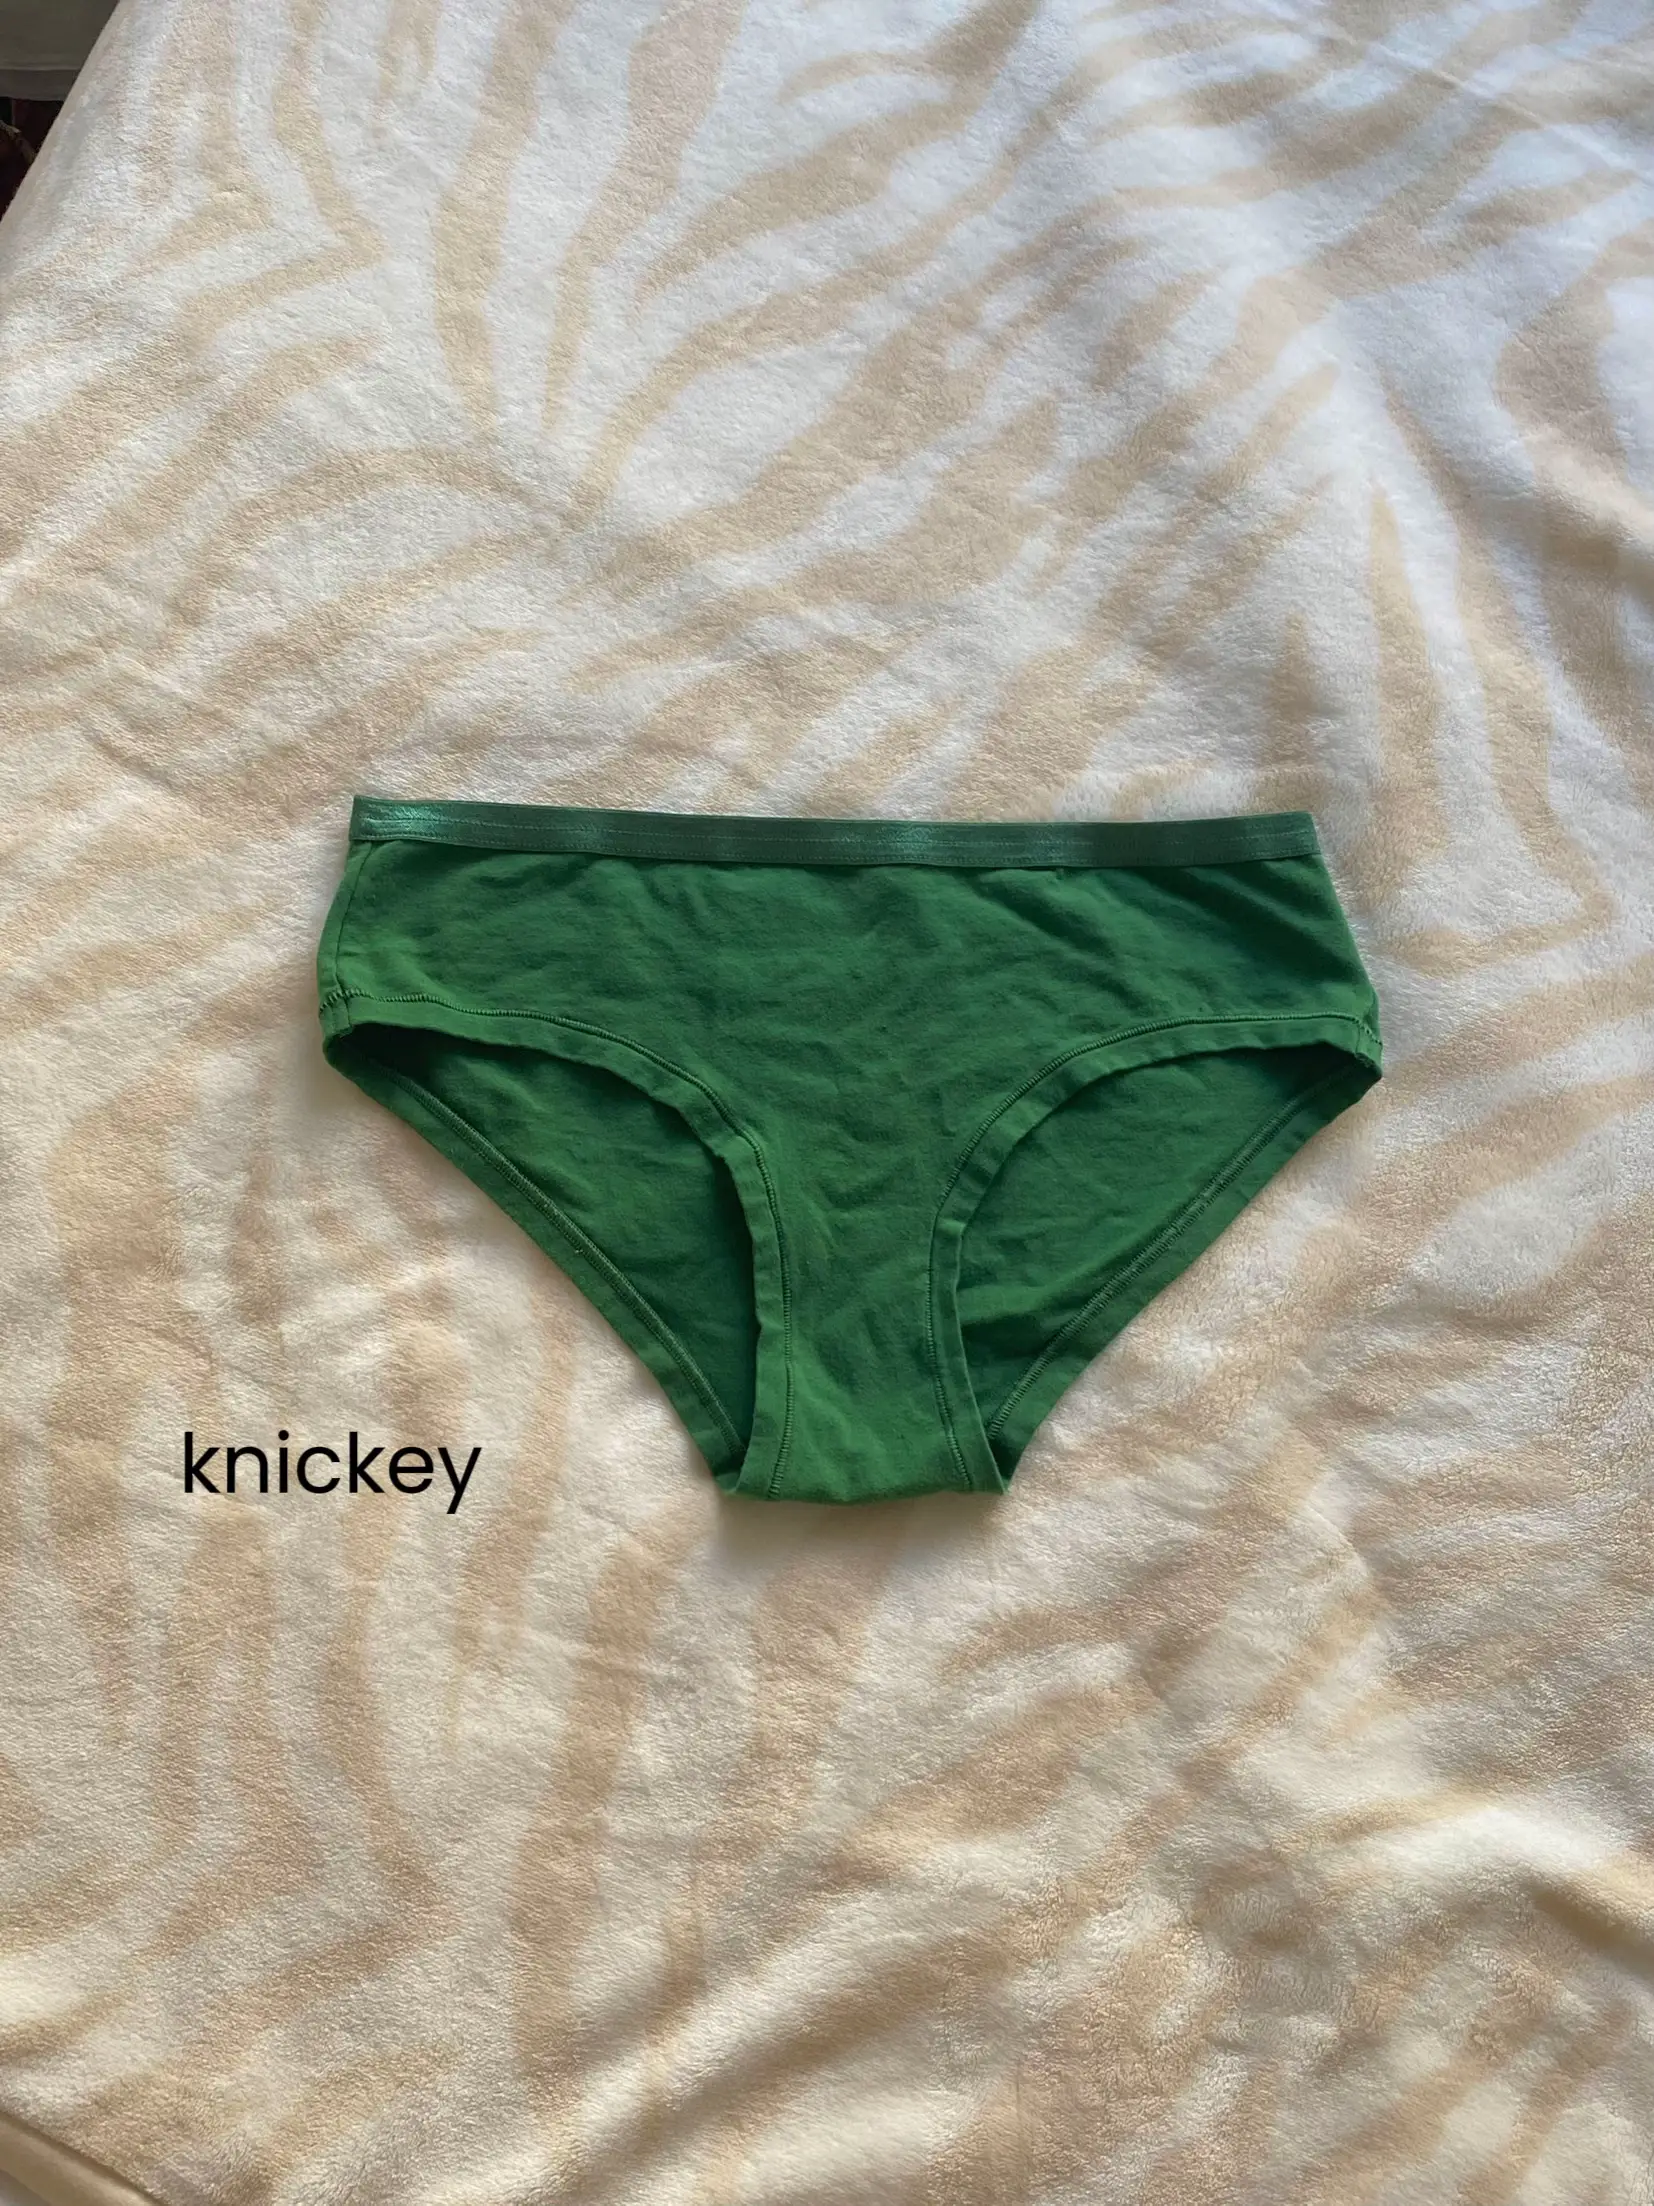 Knickey - Global Green